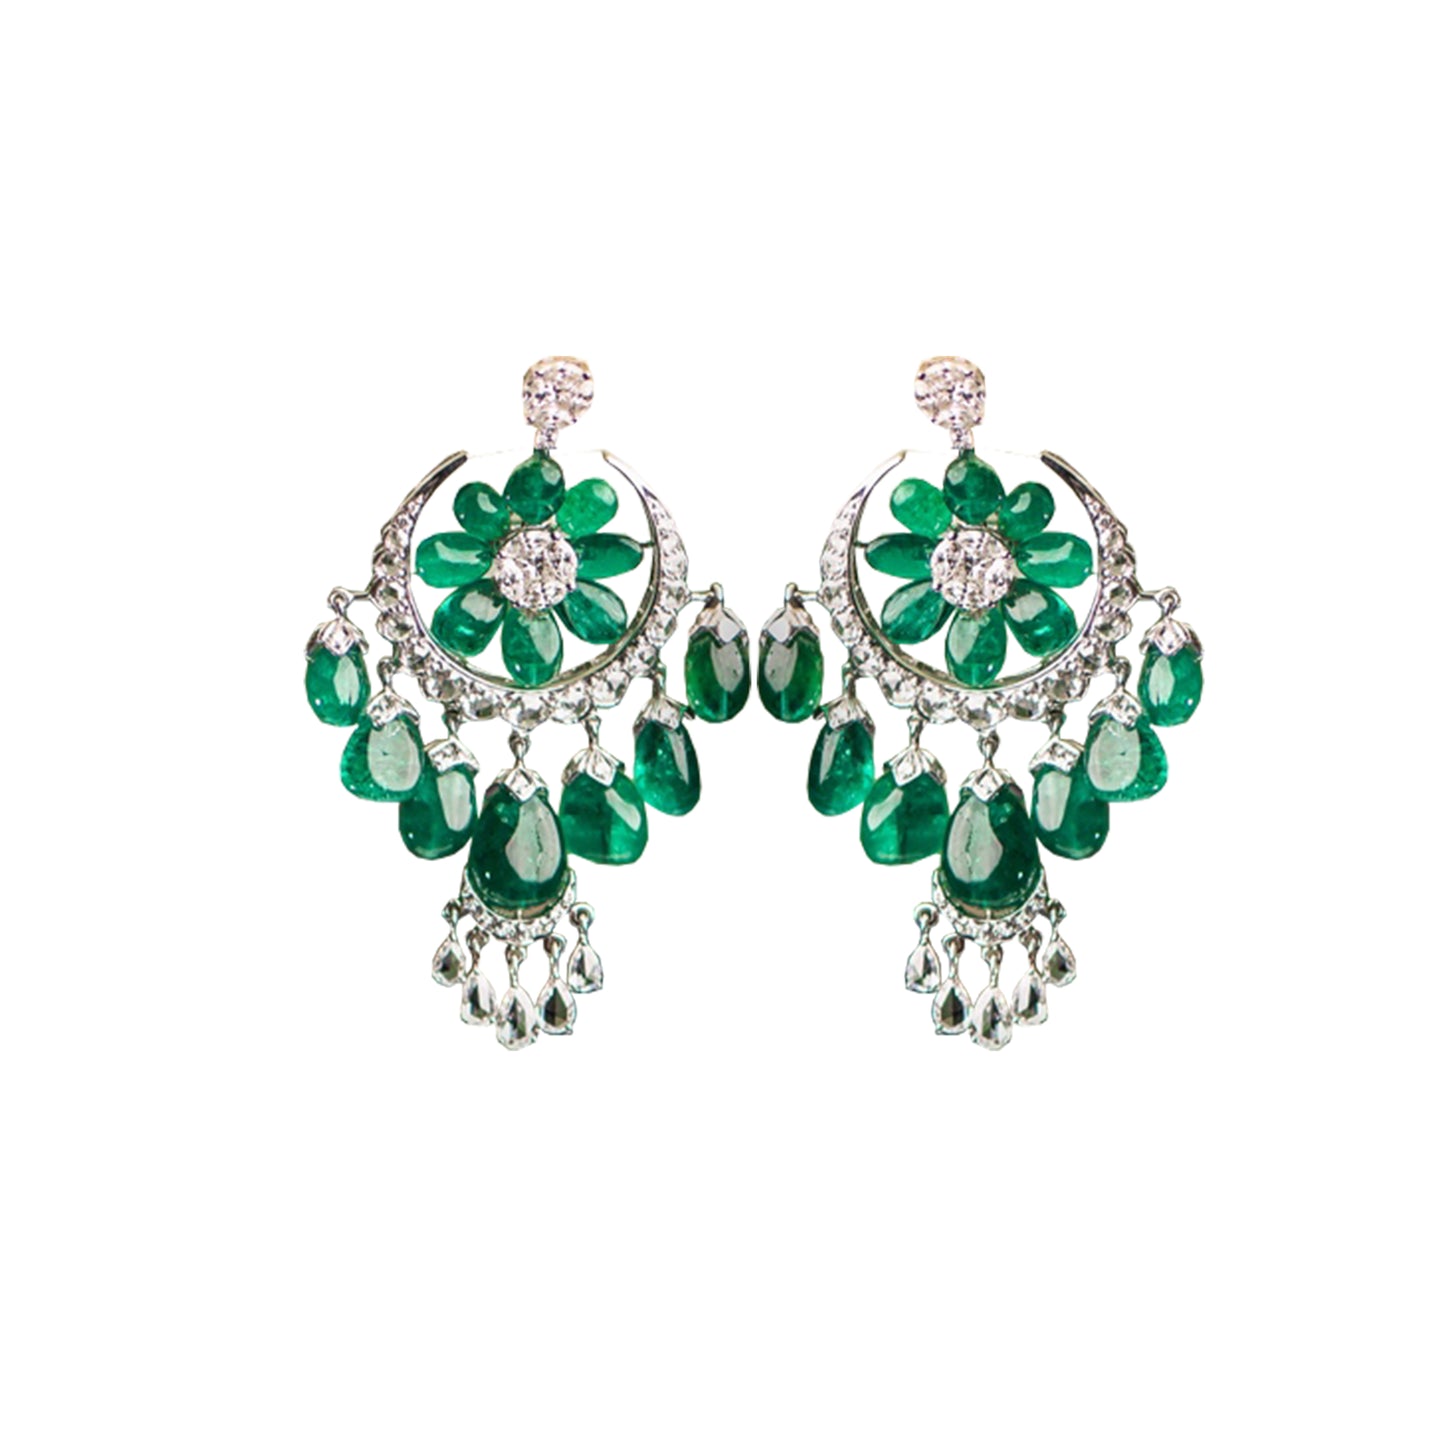 Emerald Bead Chandbali earrings